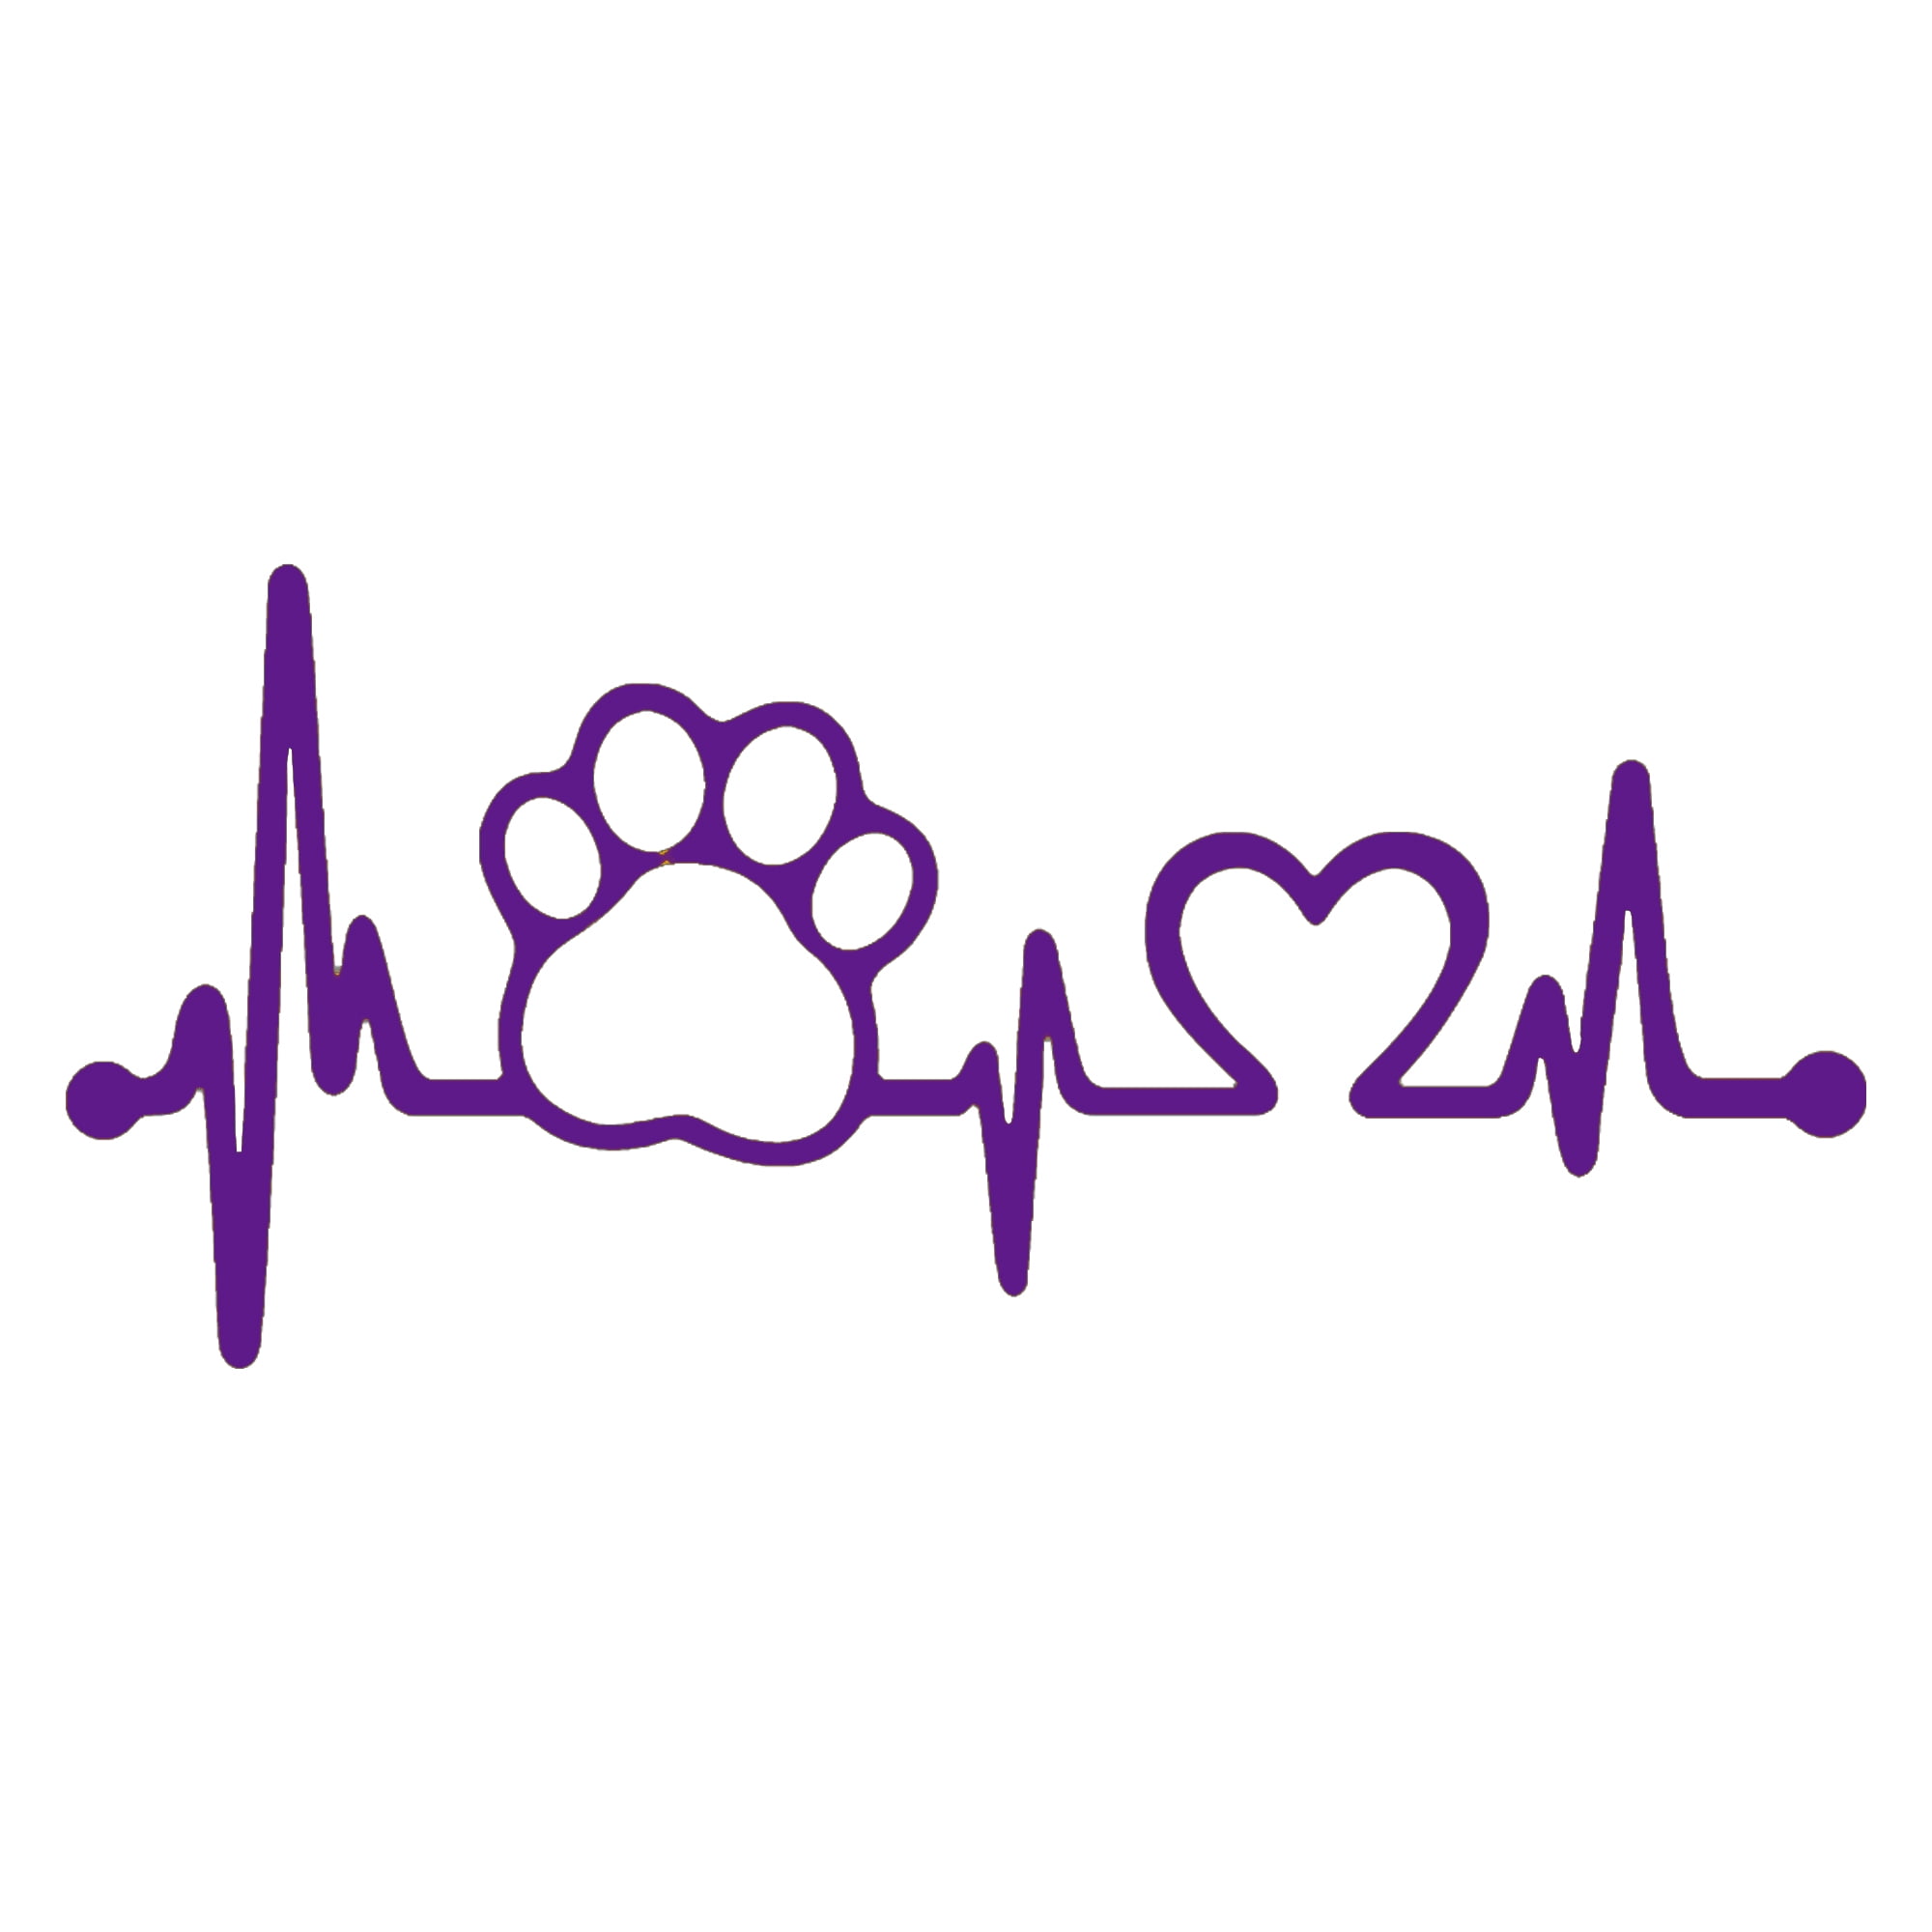 8" HEARTBEAT CHIHUAHUA LOVE Vinyl Decal Sticker Car Window Laptop Rescue Pet Dog